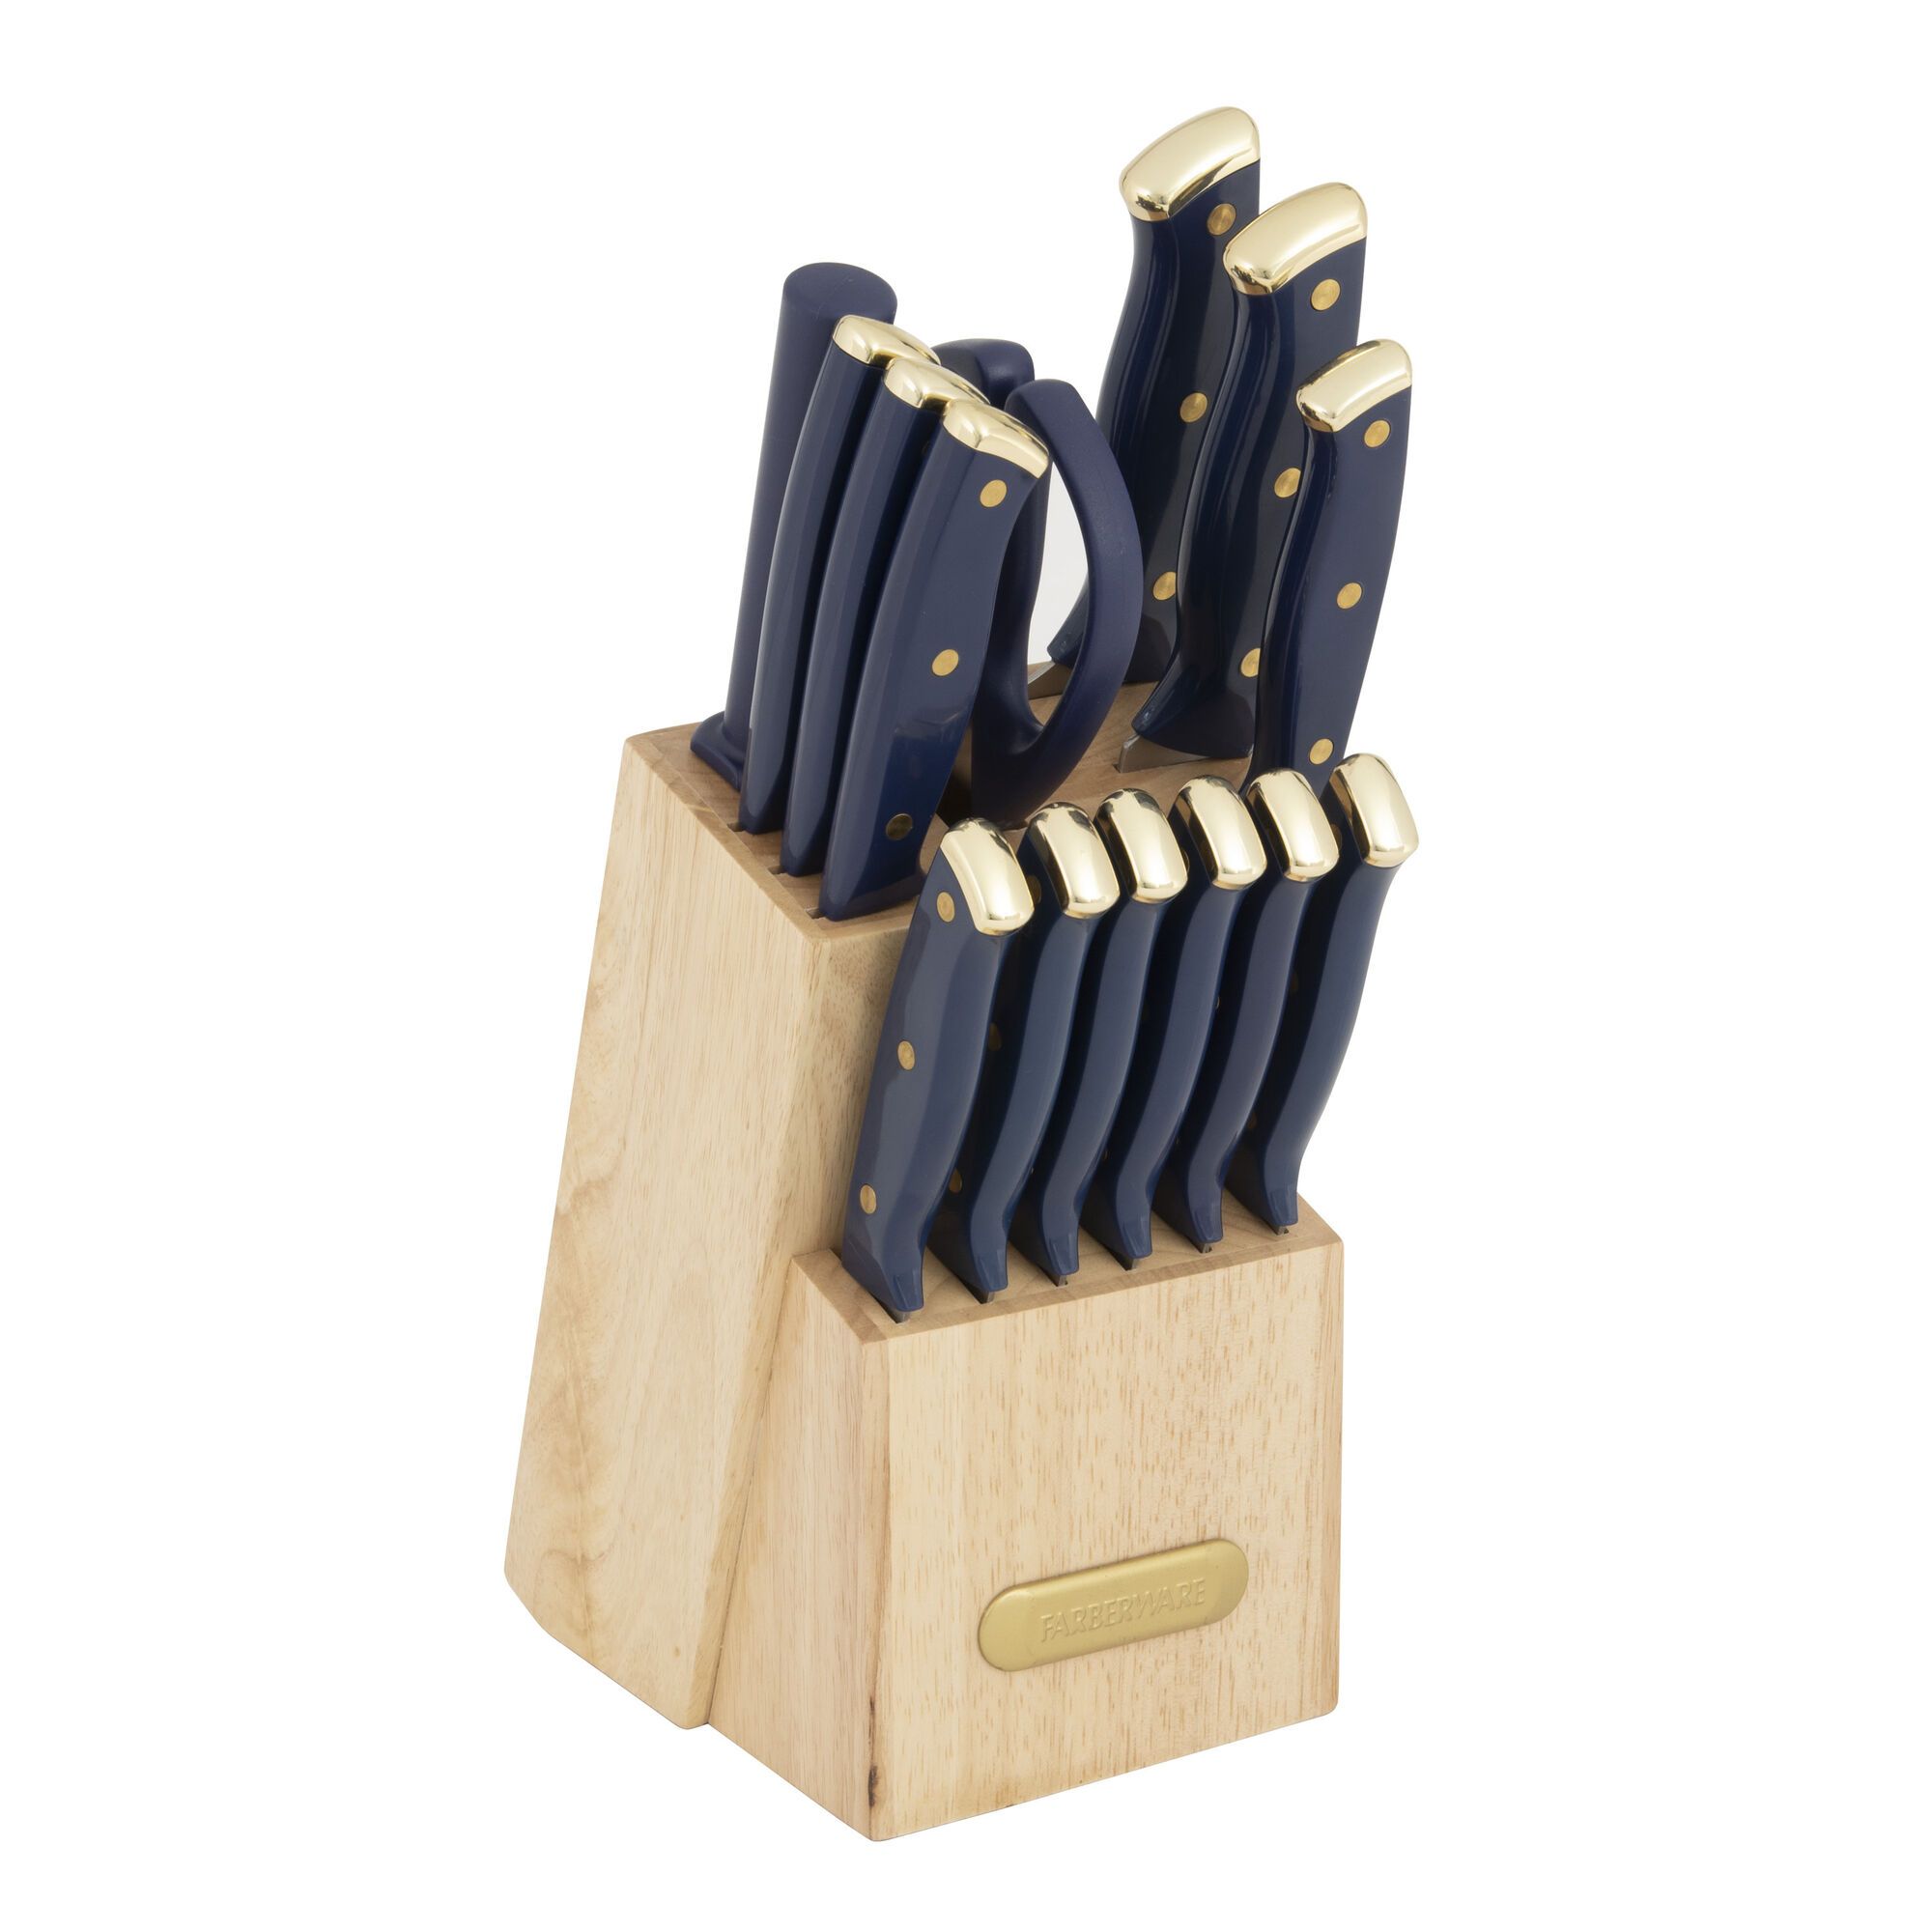 Fingerhut - Farberware 15-Pc. Knife Block Set - Navy Blue/Goldtone